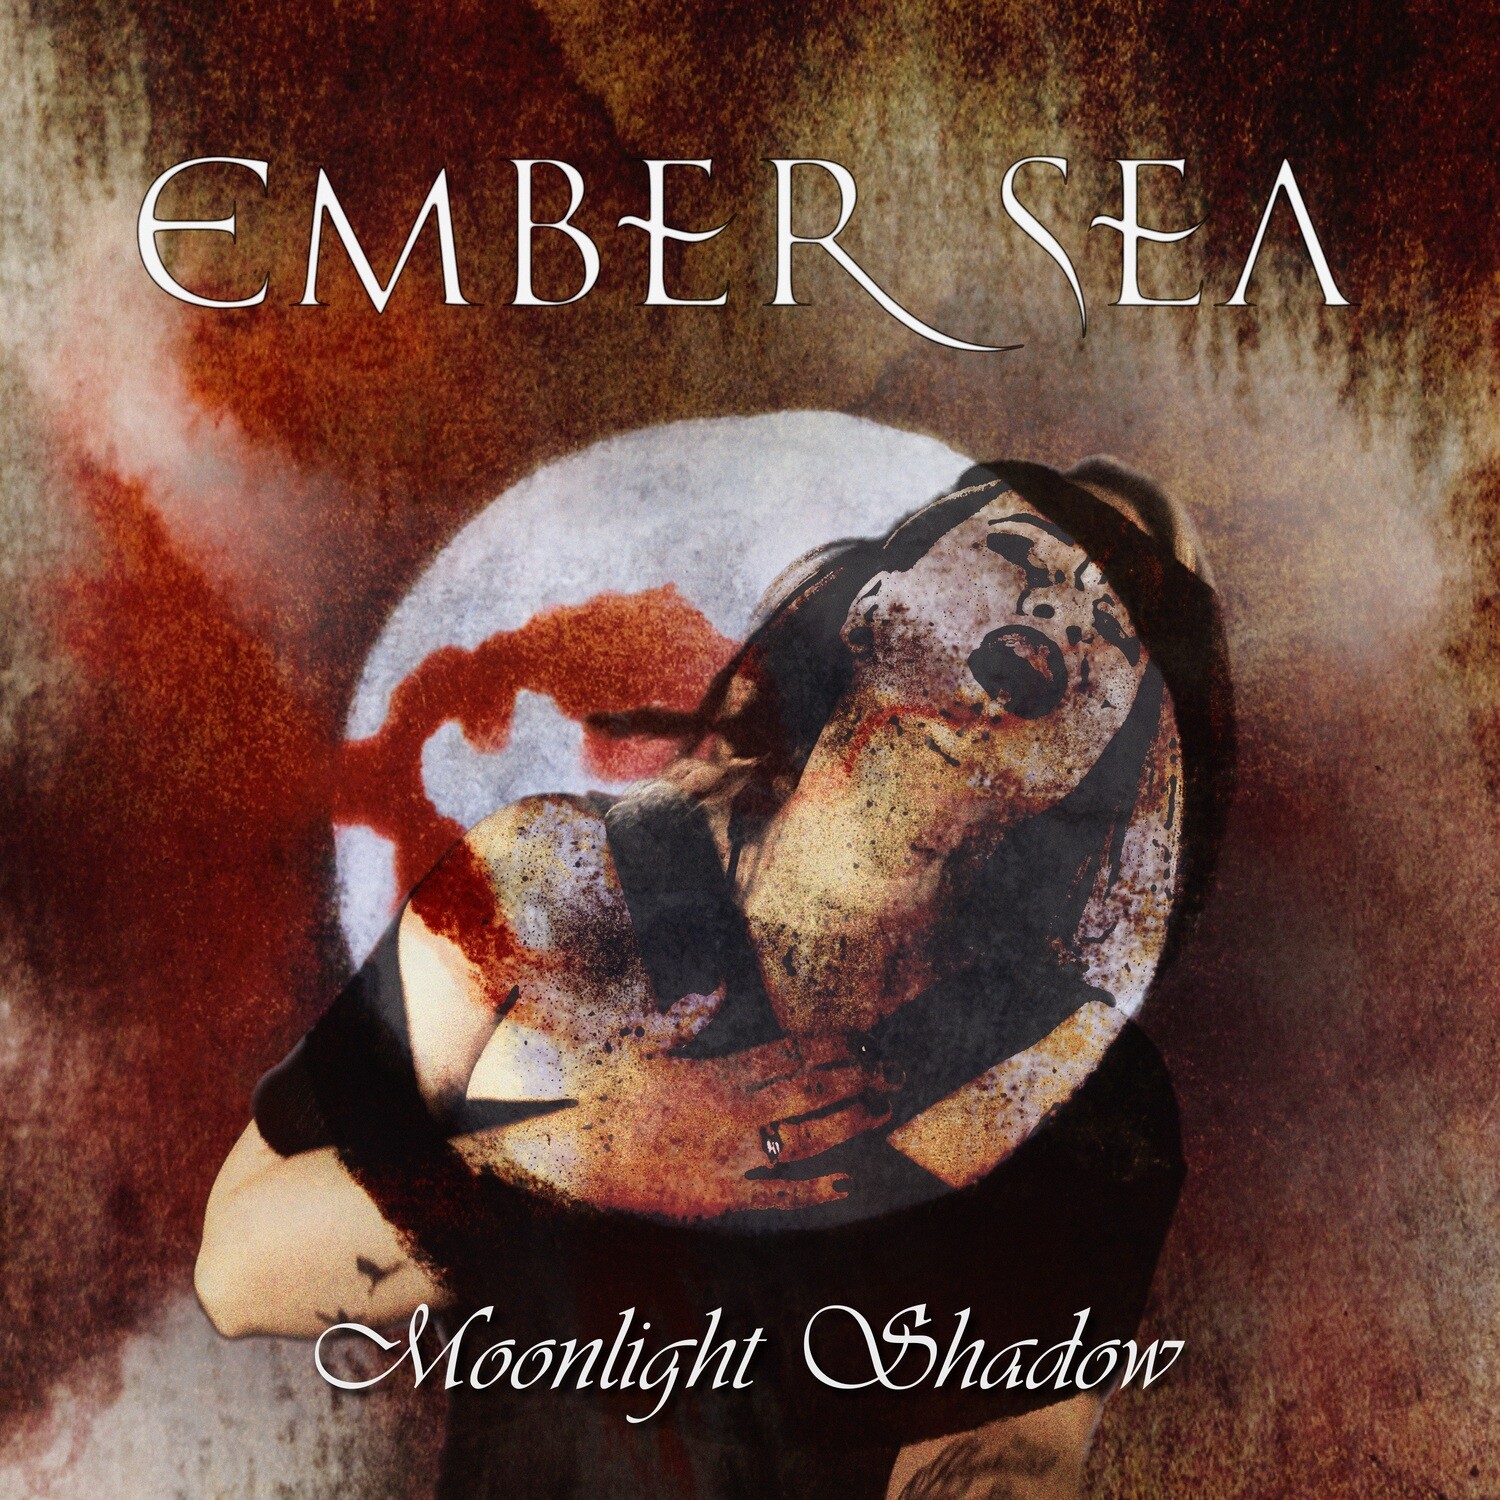 'Moonlight Shadow' (Metal Cover, Mike Oldfield) MP3/WAV, 4 Tracks, 2 full Videos & Bonus Material by Ember Sea, Digital Single